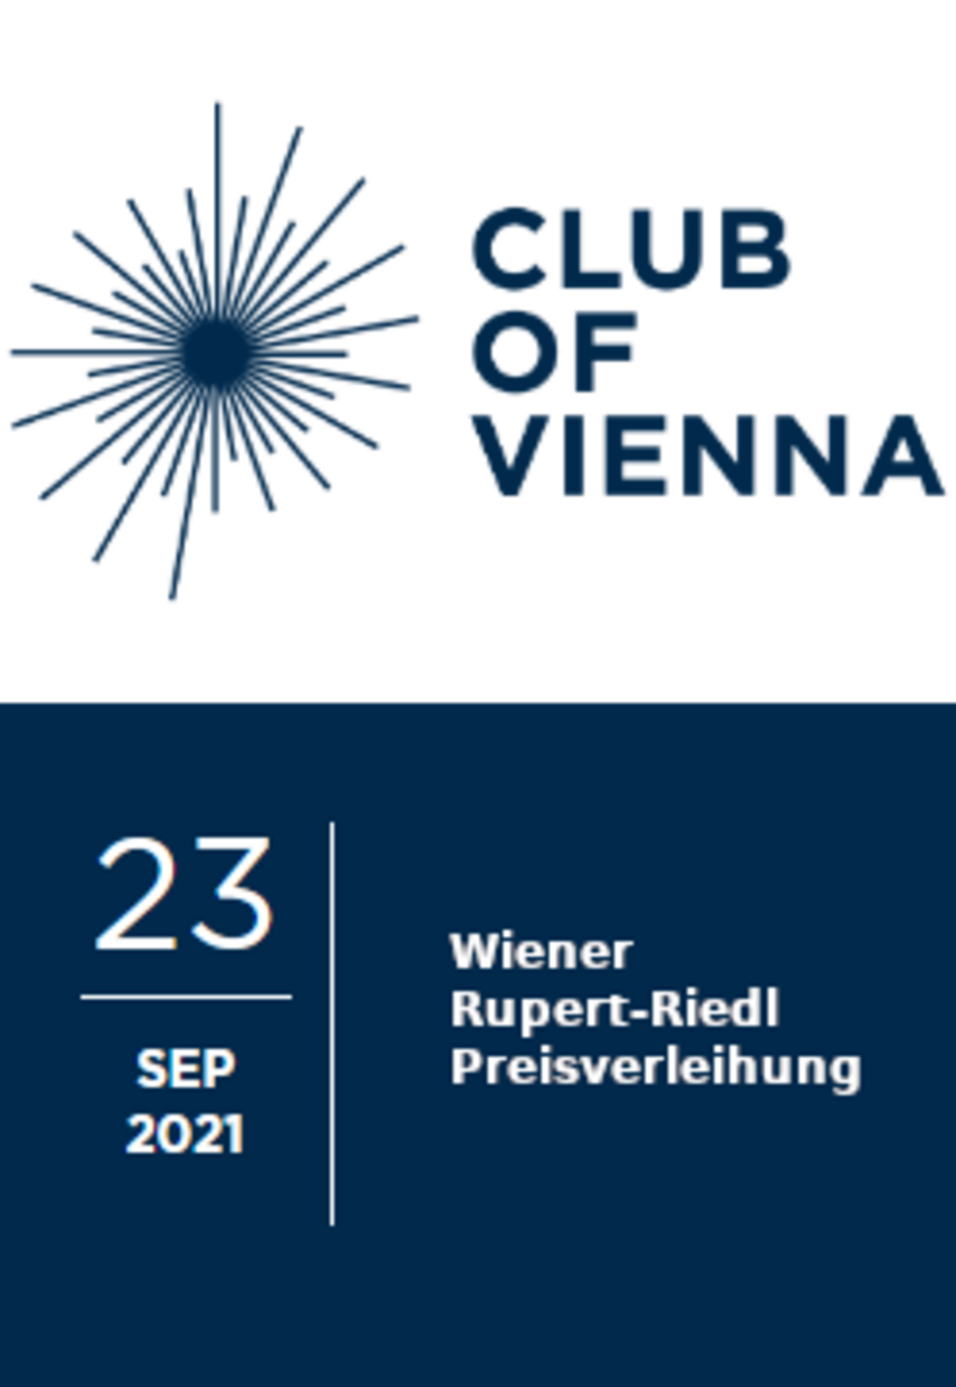 Logo of the Club of Vienna (sun-like circle); 23 September: Rupert-Riedl award ceremony